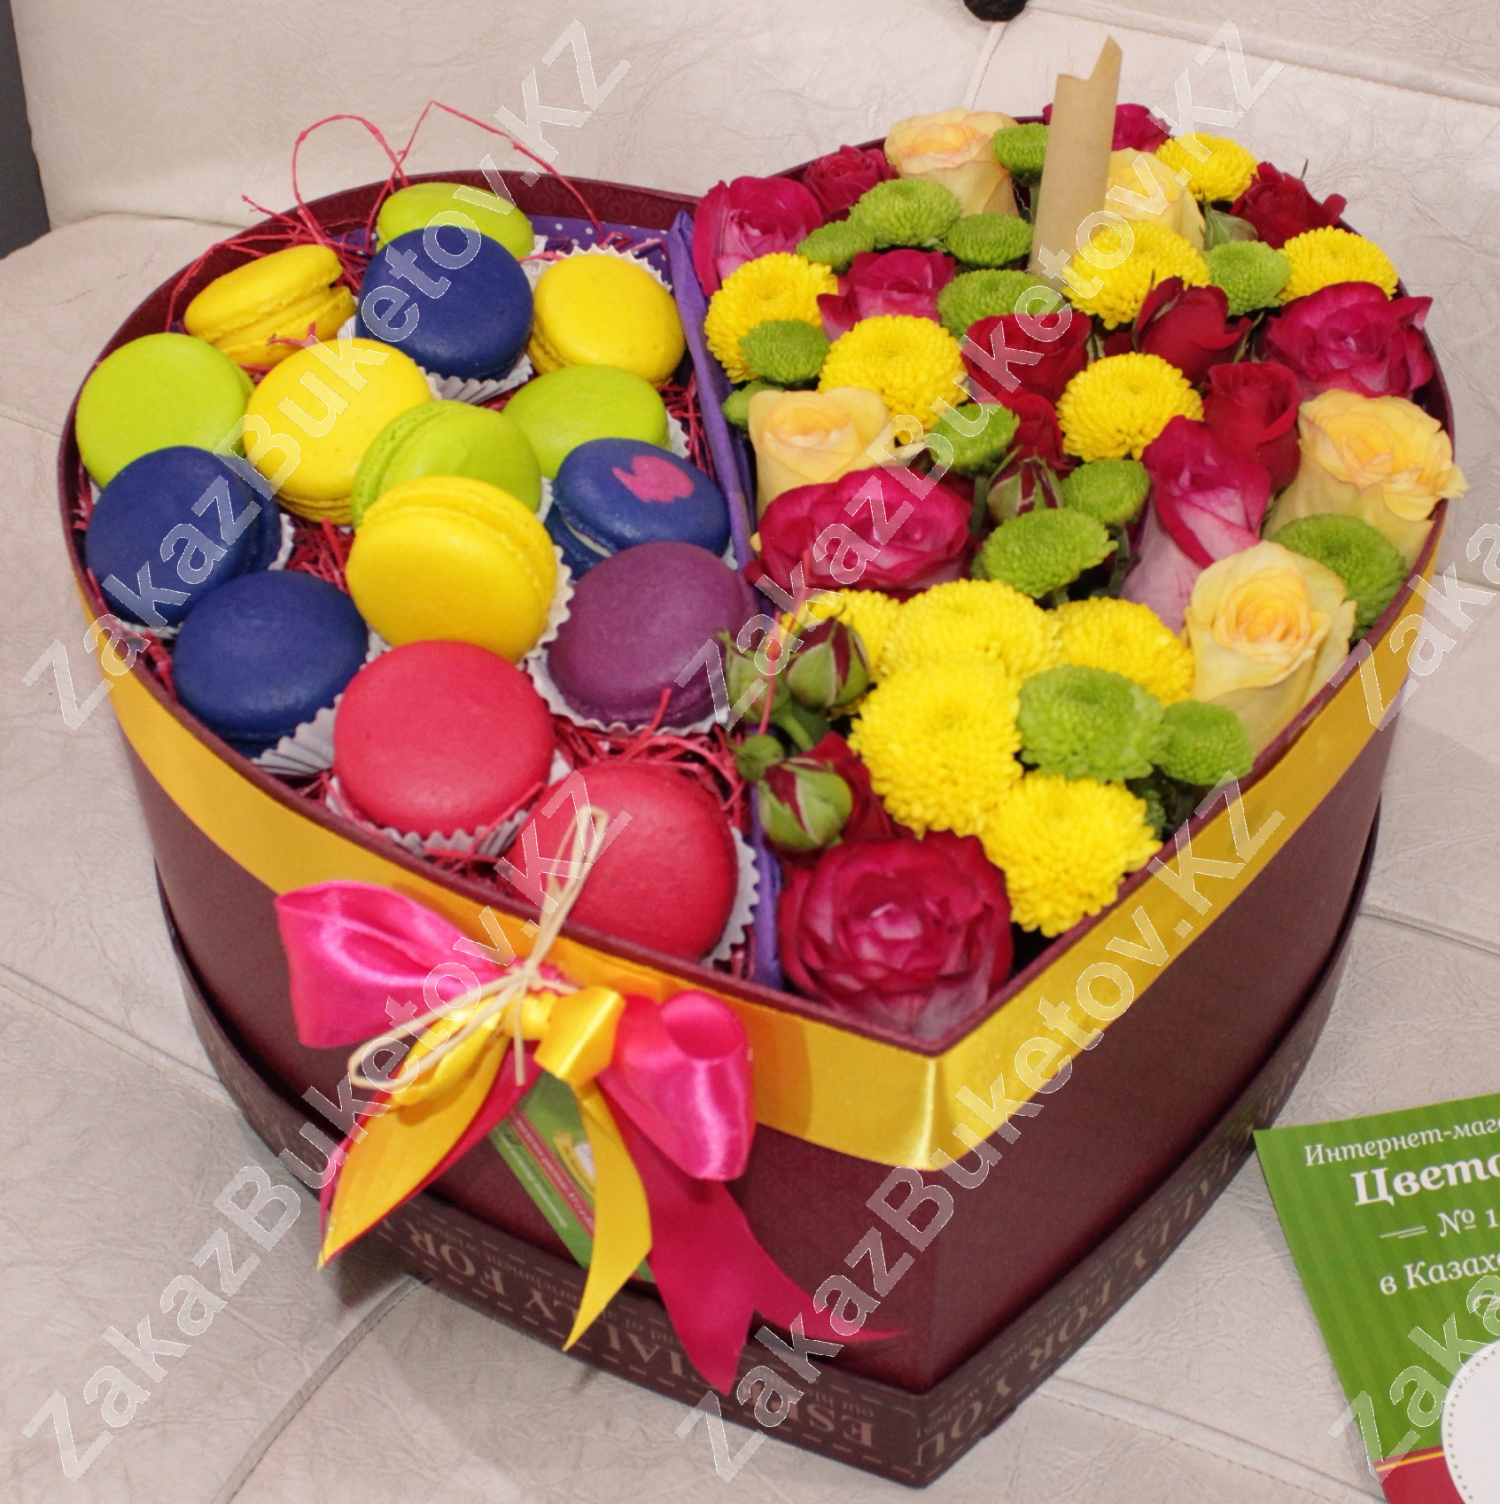 Коробка с цветами и французскими макаронс